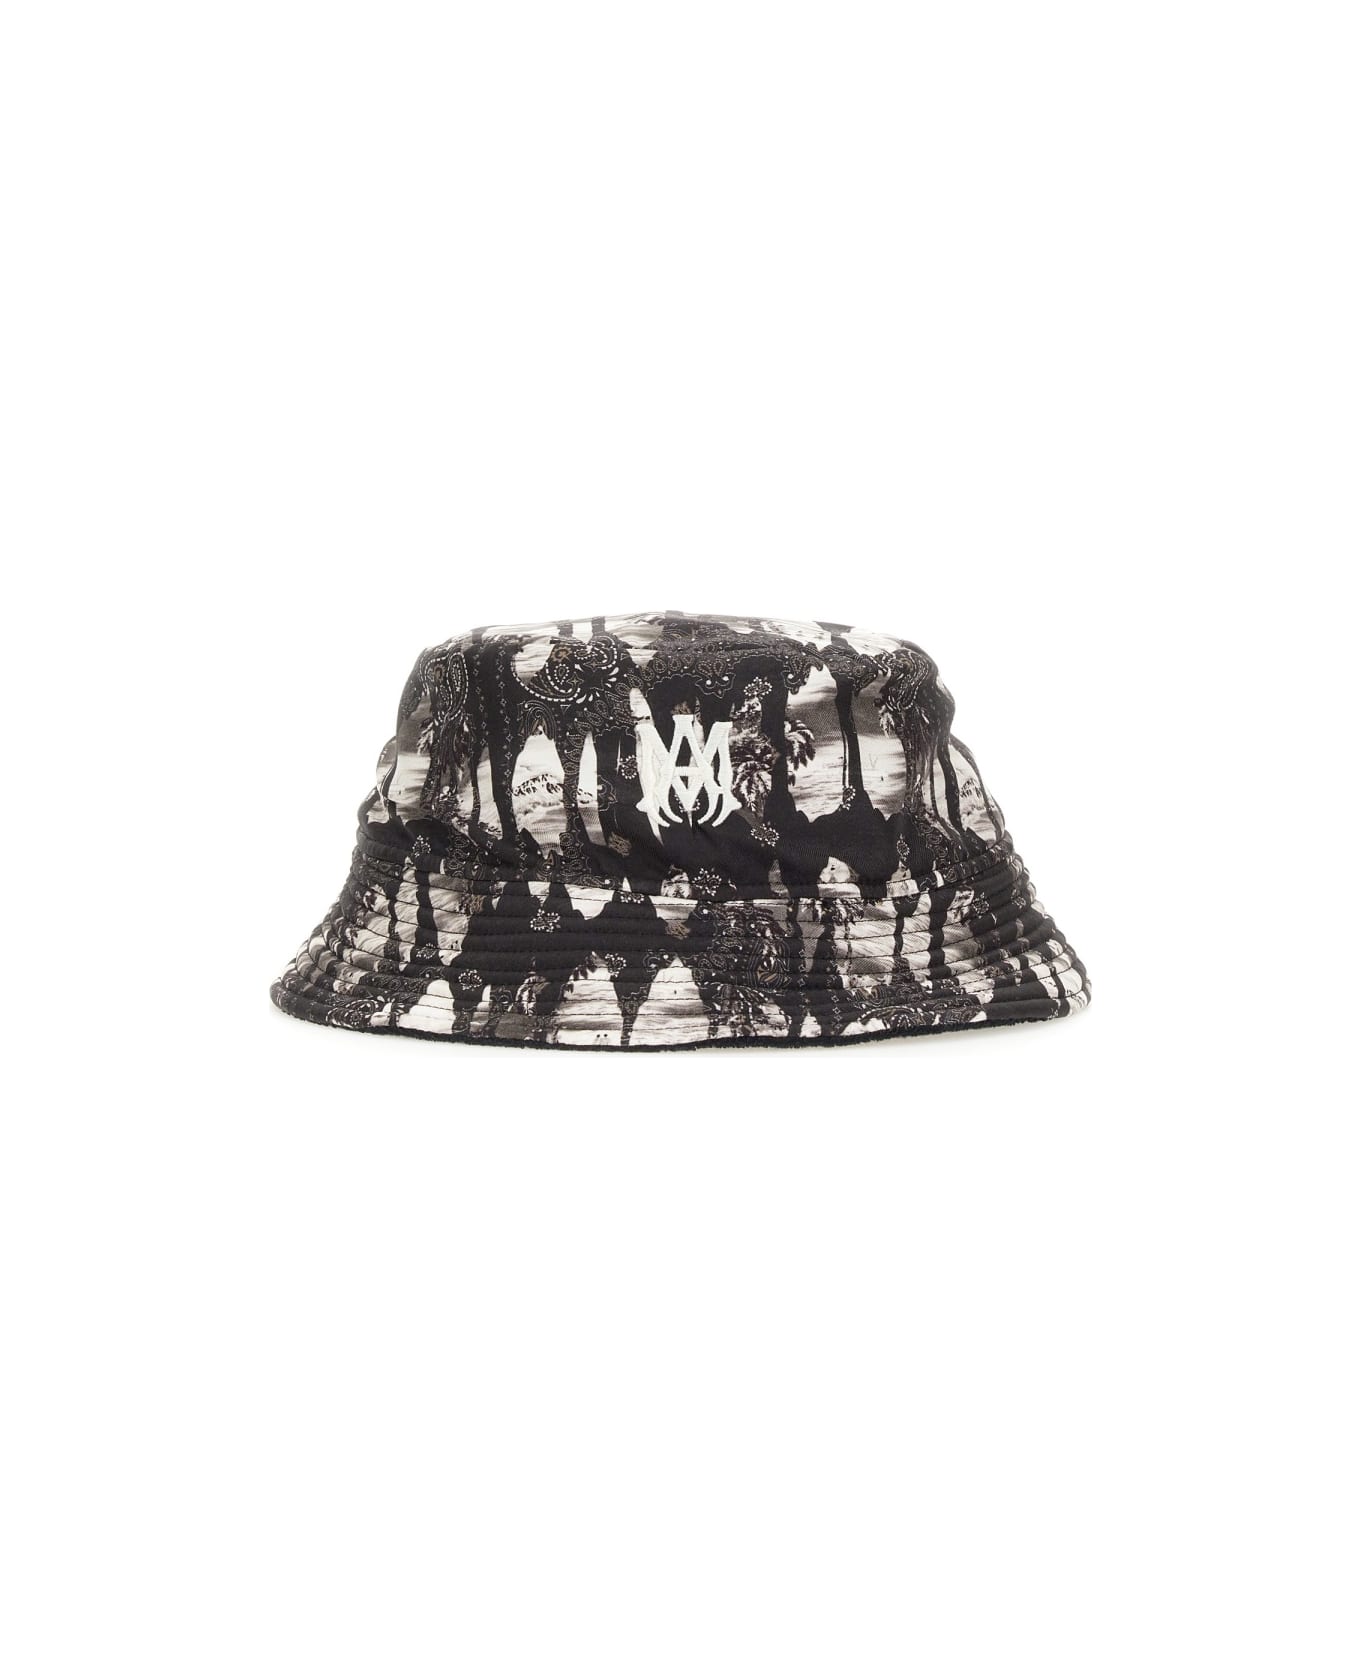 AMIRI Bucket Hat - BLACK 帽子